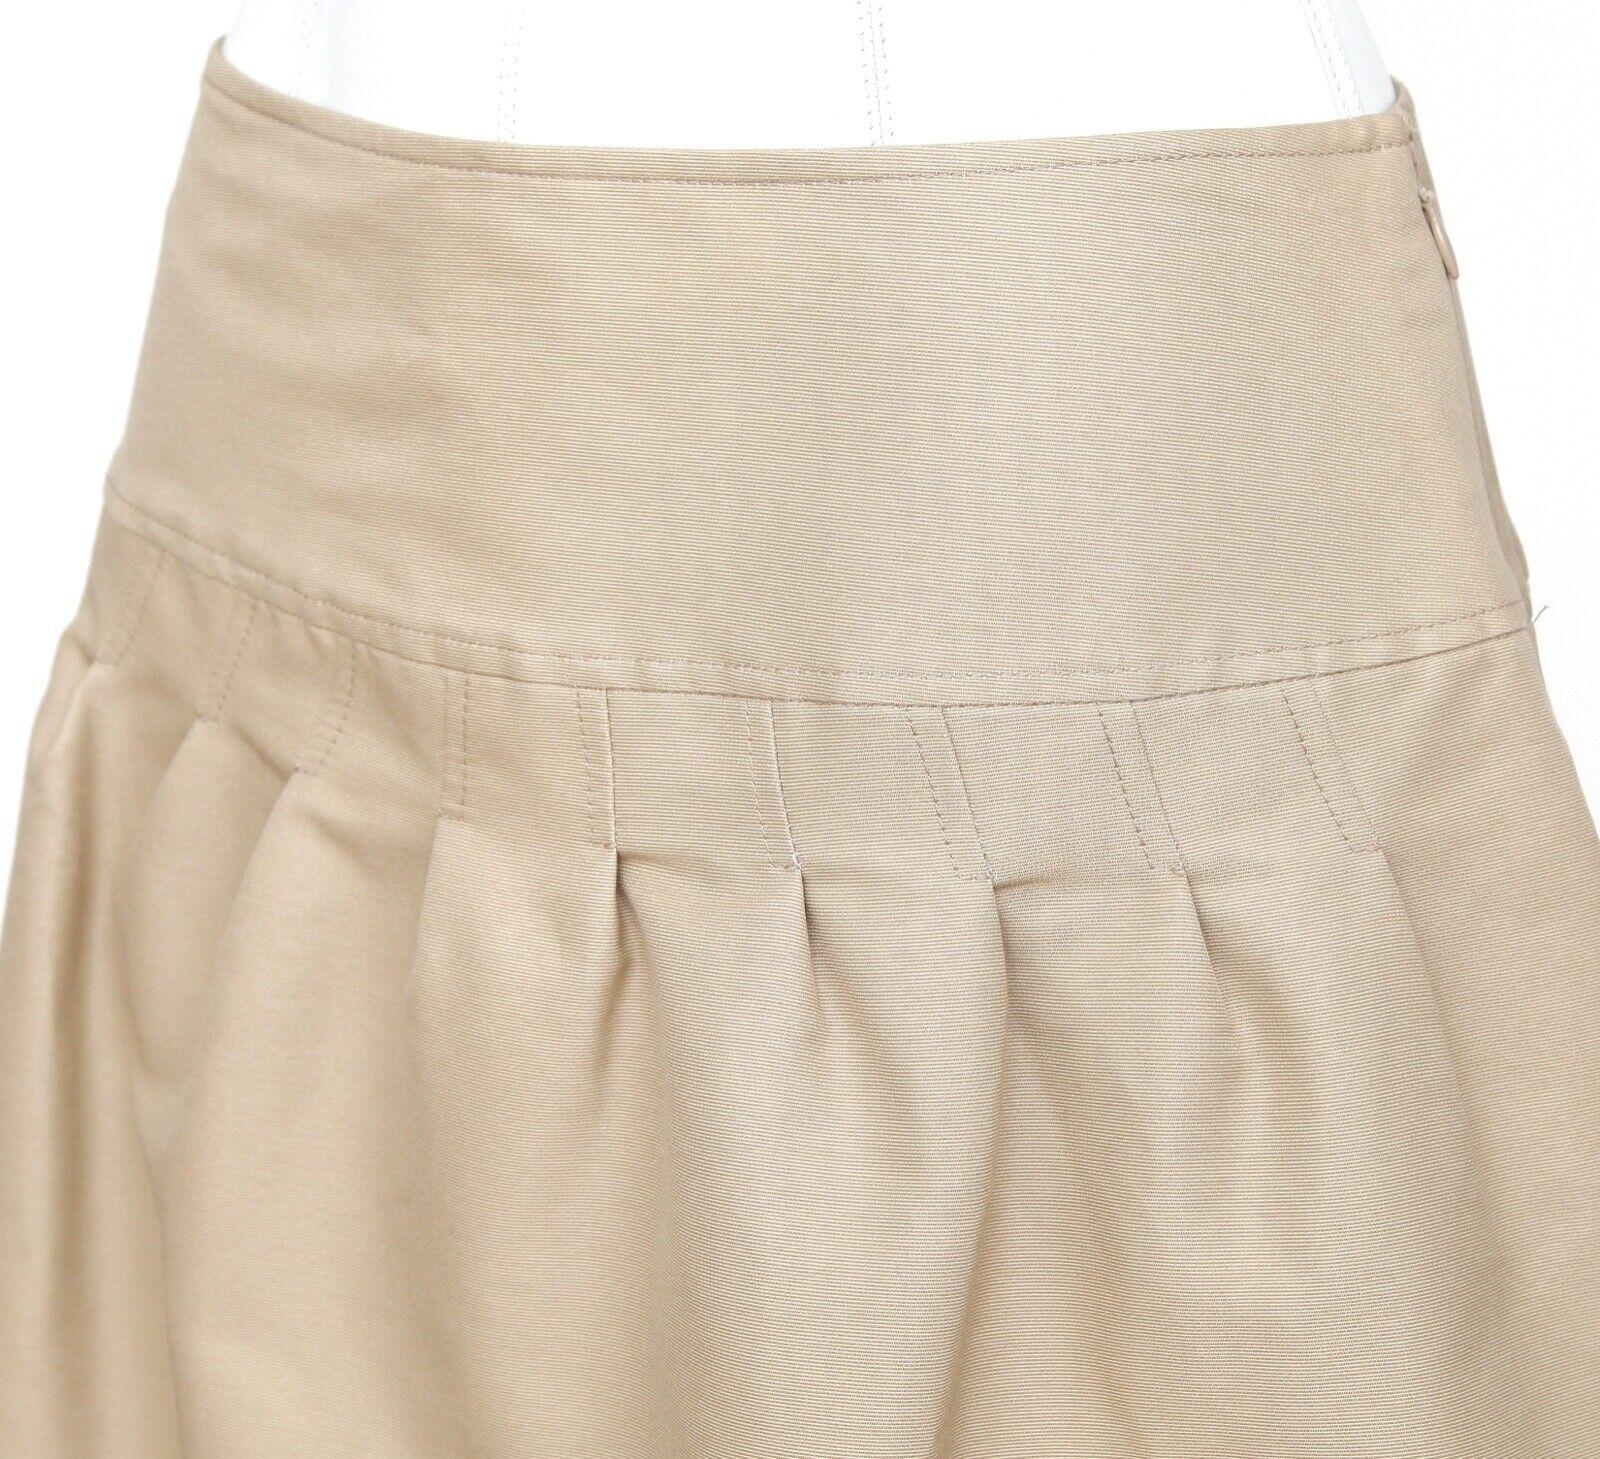 VALENTINO Skirt Beige A-Line Above Knee Cotton Silk Sz 4 BNWT $980 For Sale 1